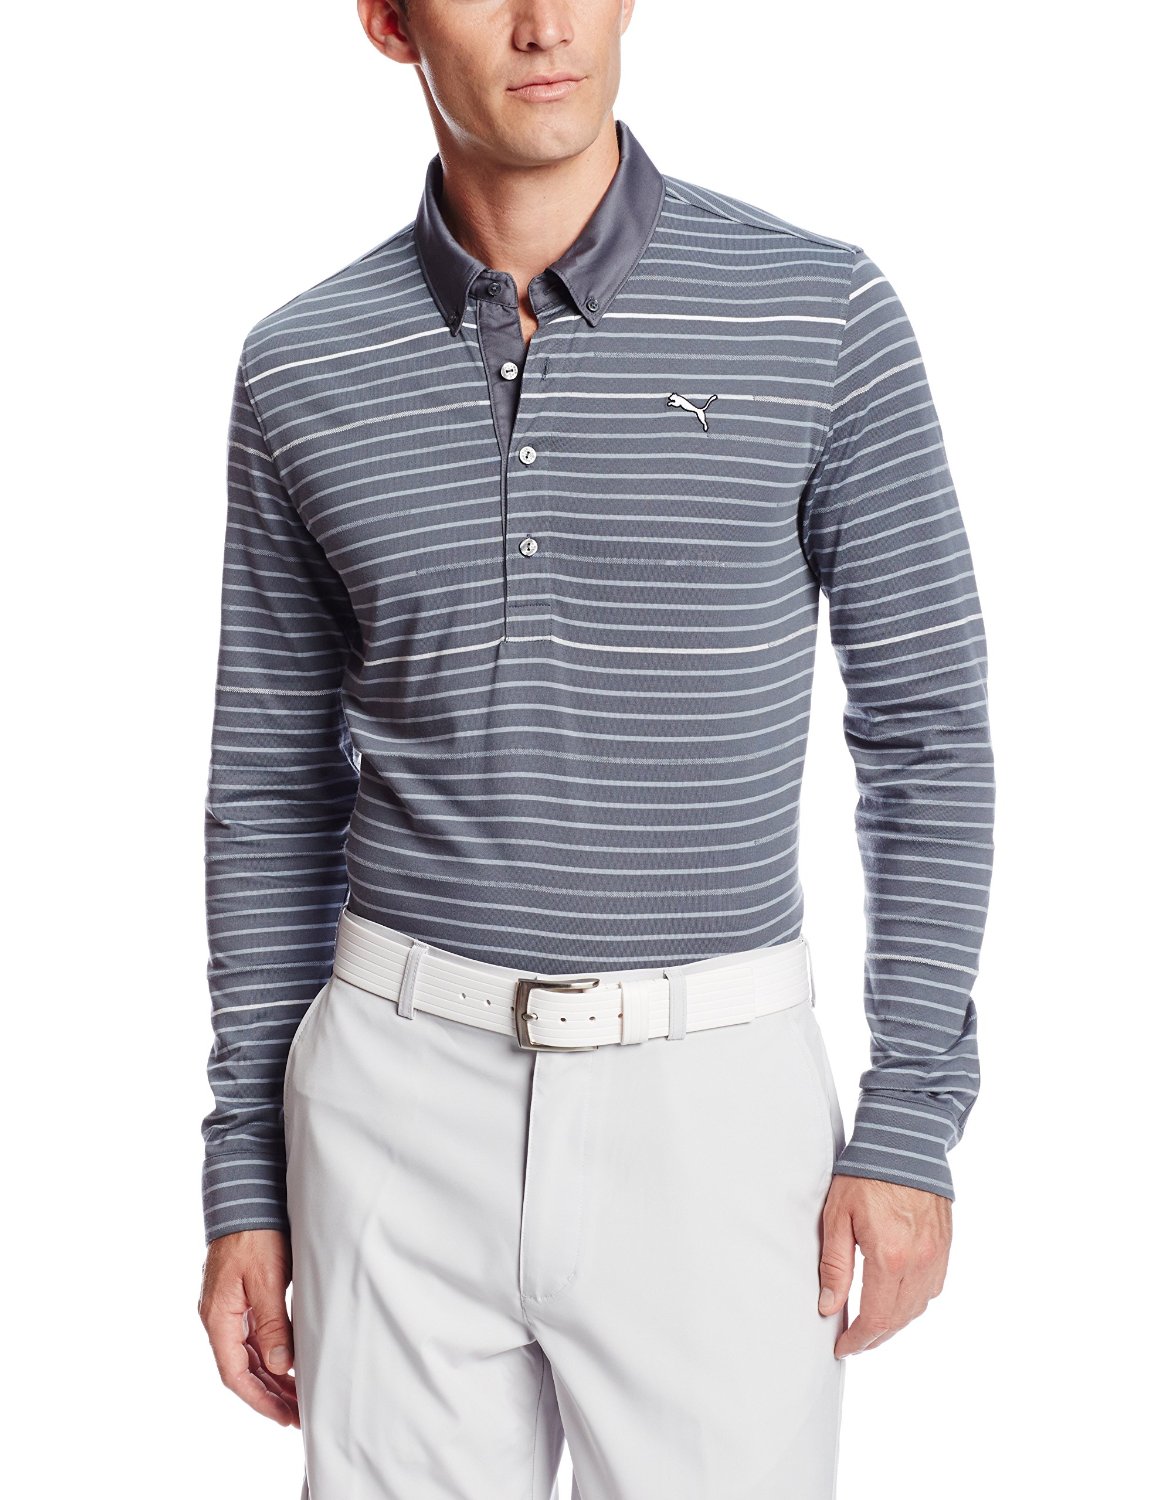 puma long sleeve golf shirts